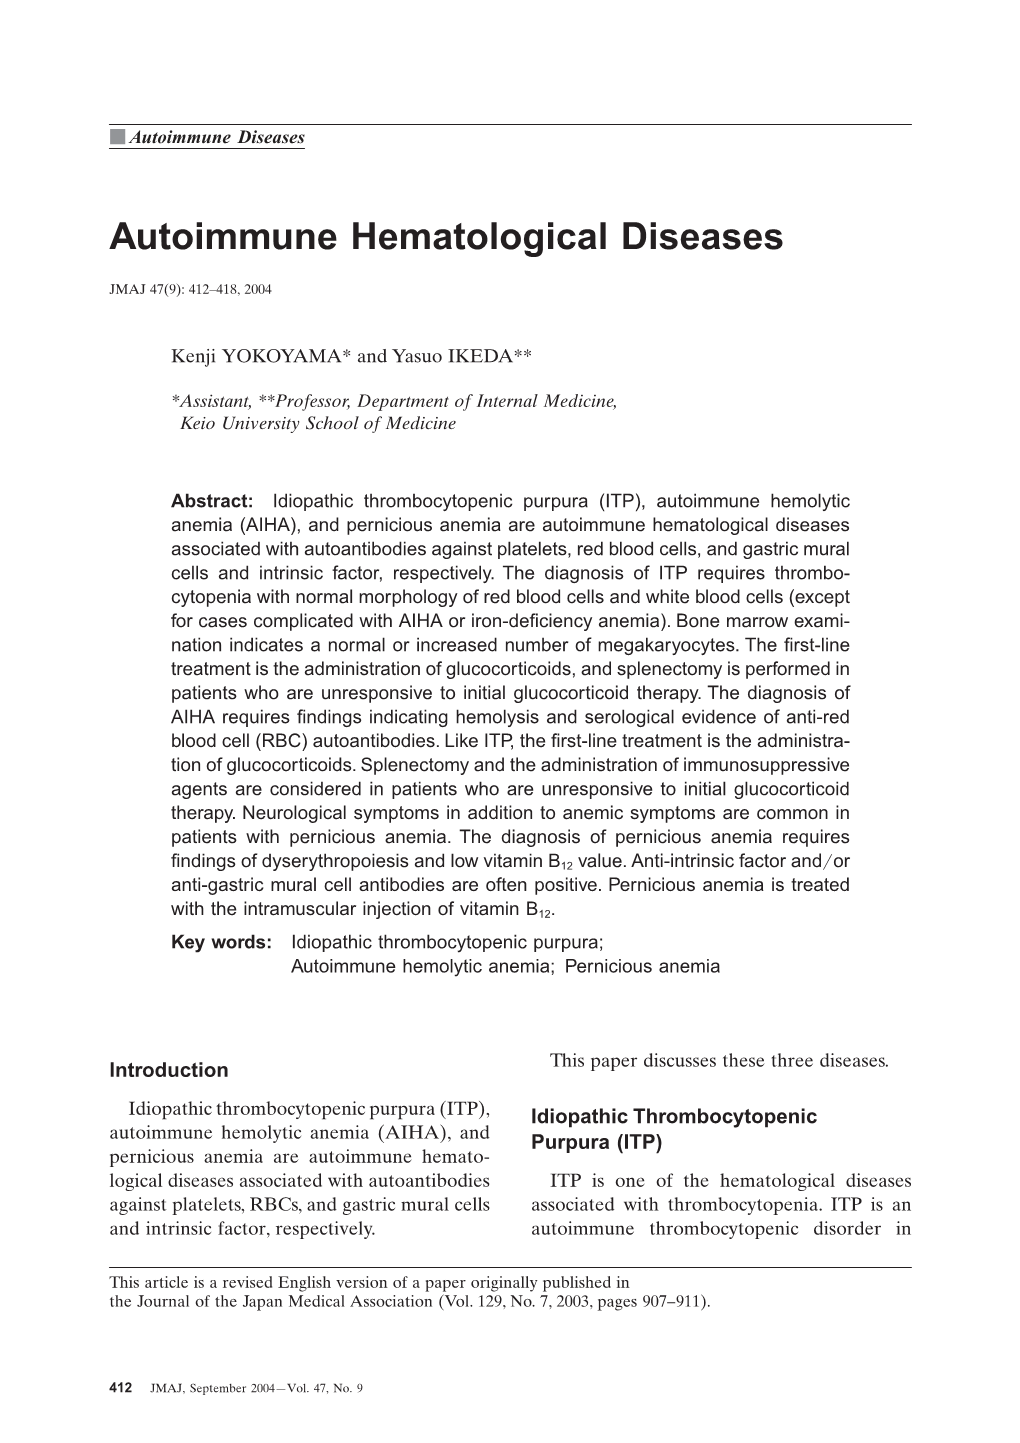 Autoimmune Hematological Diseases